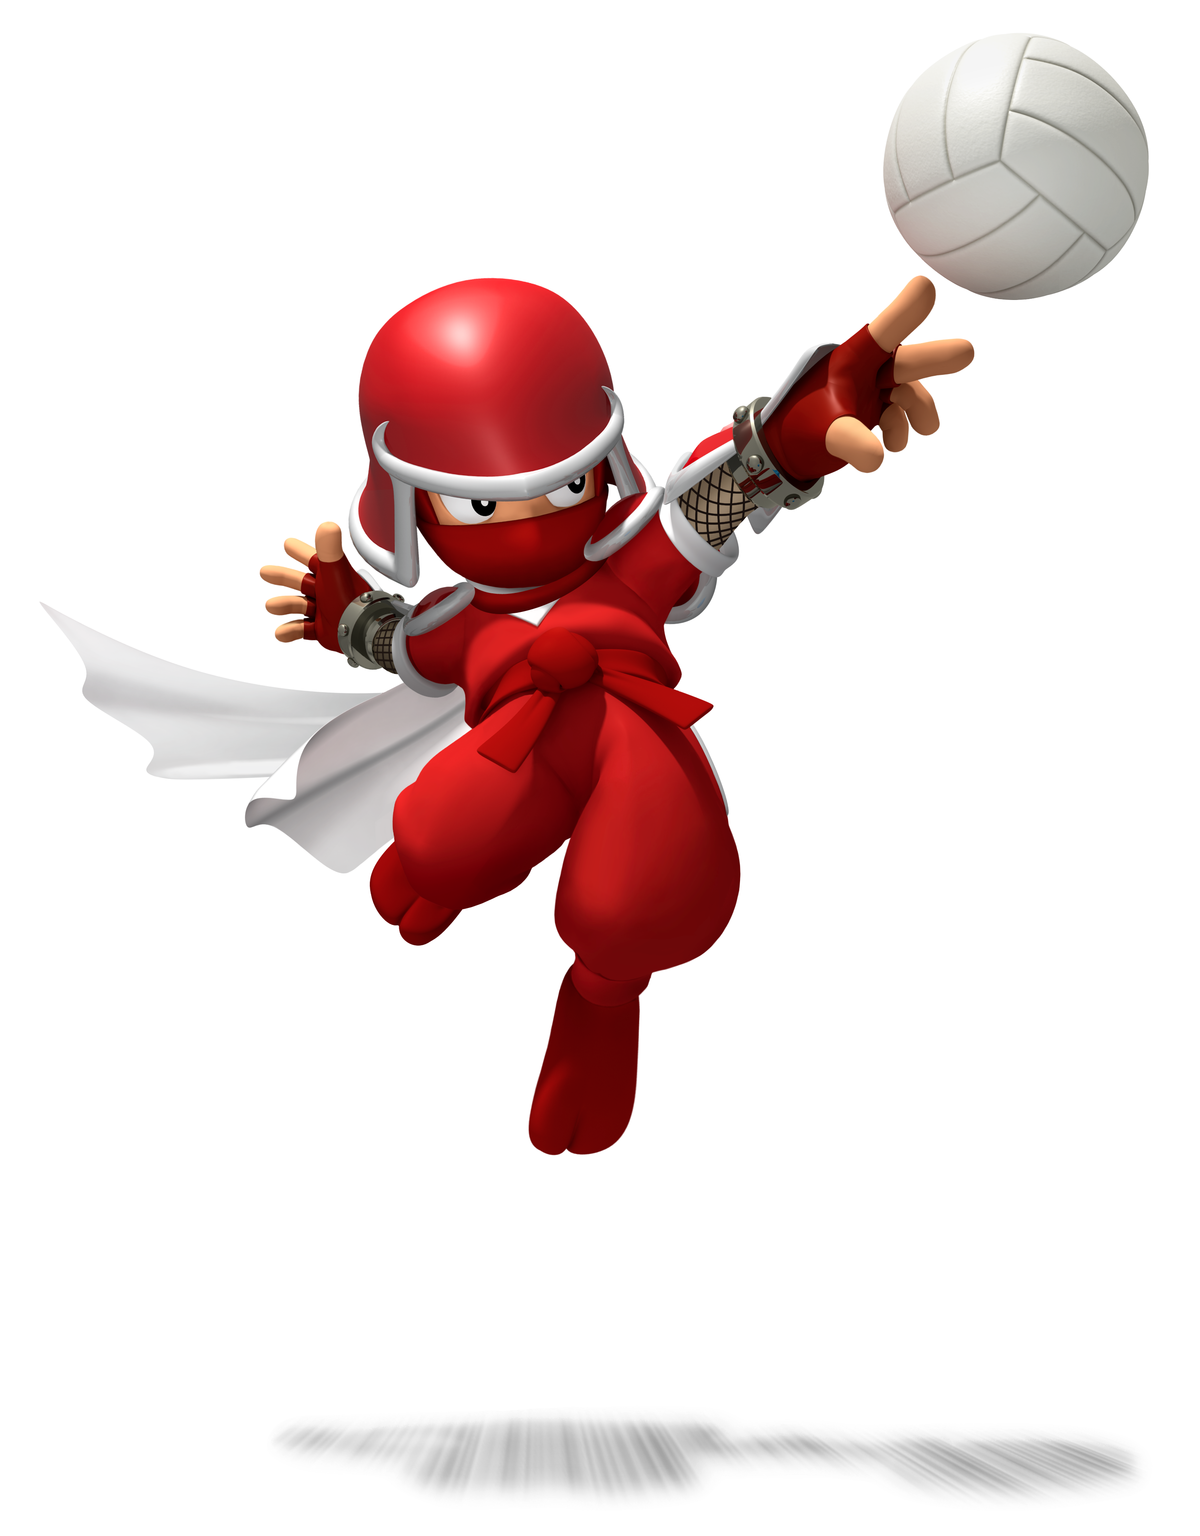 Ninja (character) - Super Mario Wiki, the Mario encyclopedia